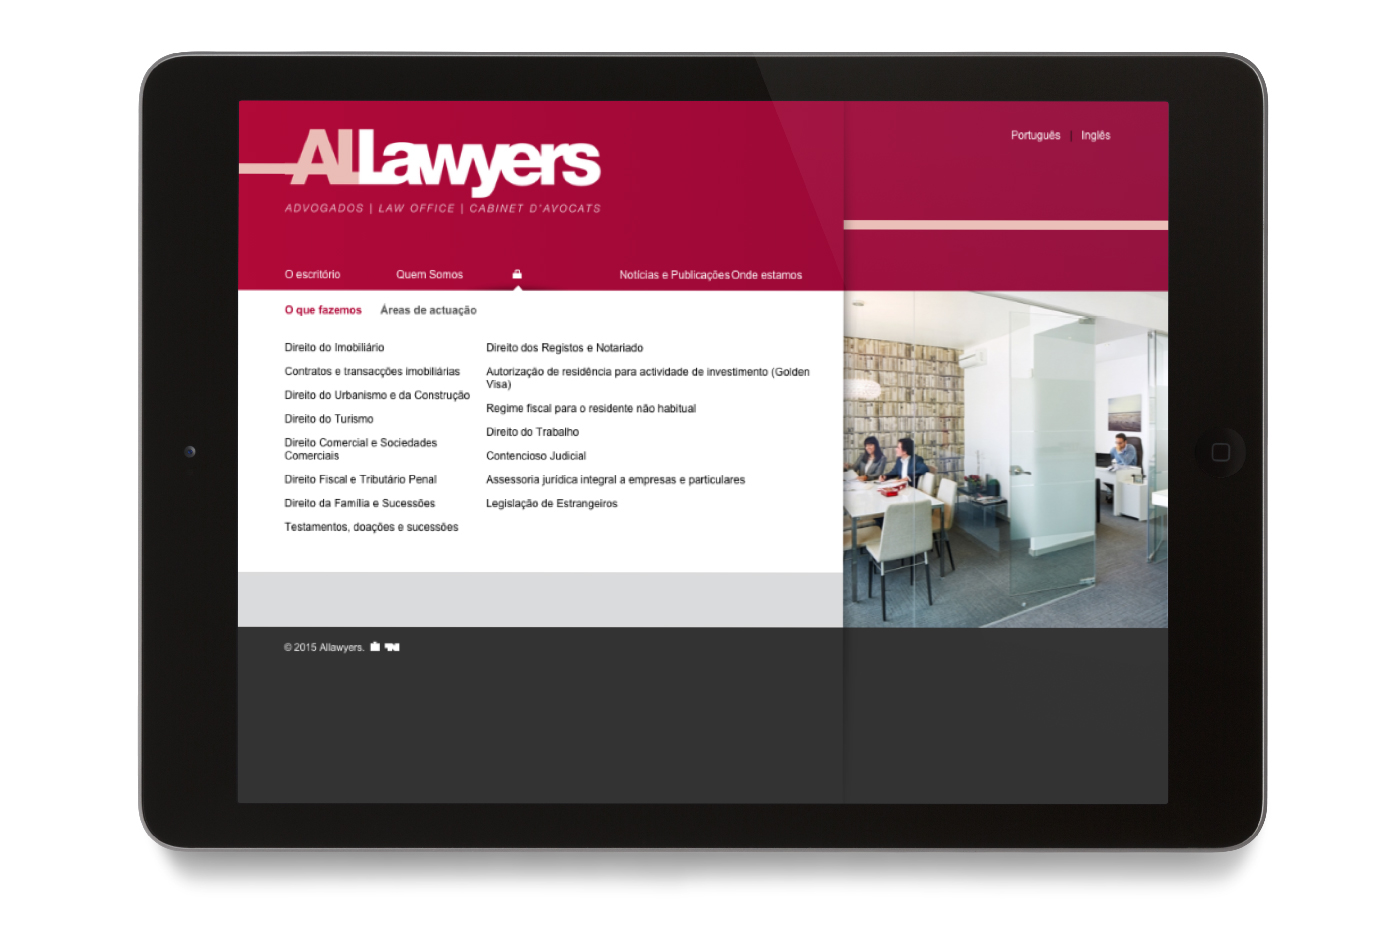 lawyers logo allawyers advogado advocat Office